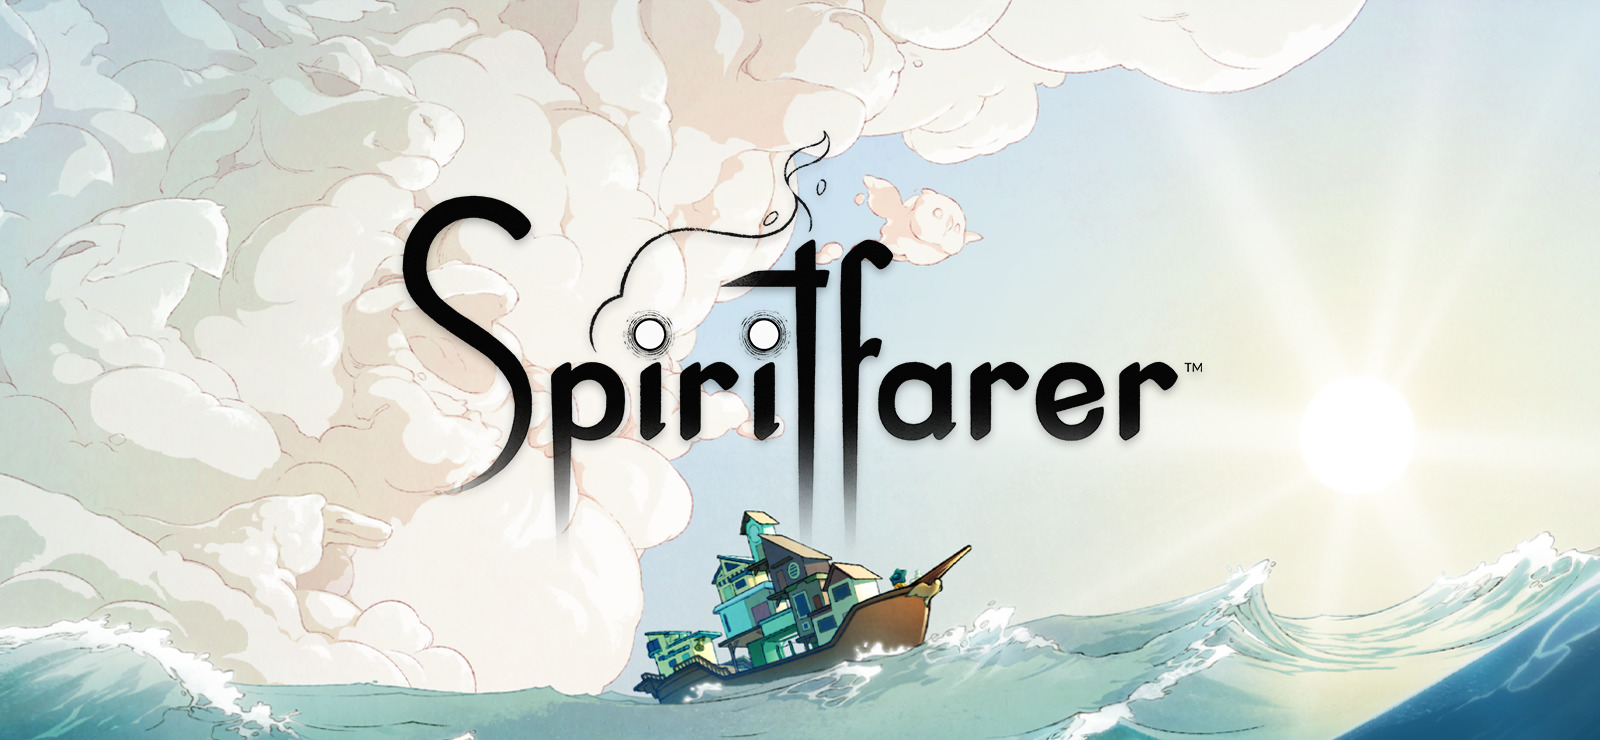 spiritfarer gameplay